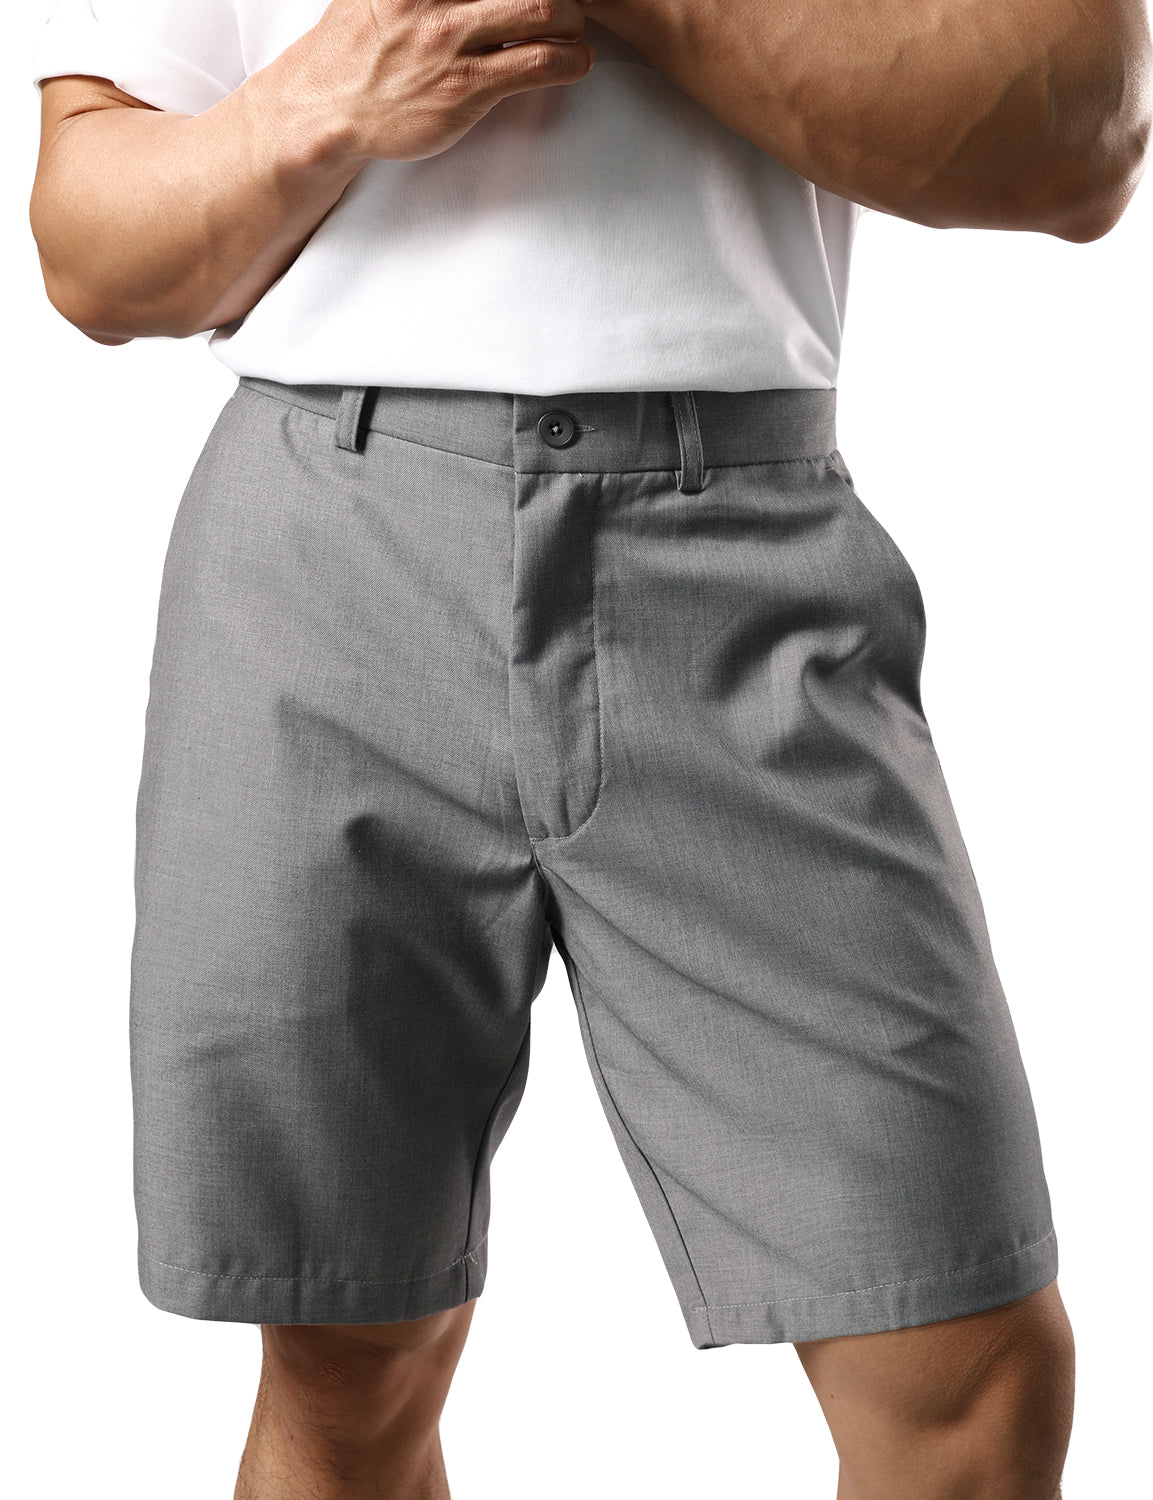 JOGAL Mens Regular Fit Flat Front Golf Shorts Daily Casual Work Wear Chino Shorts